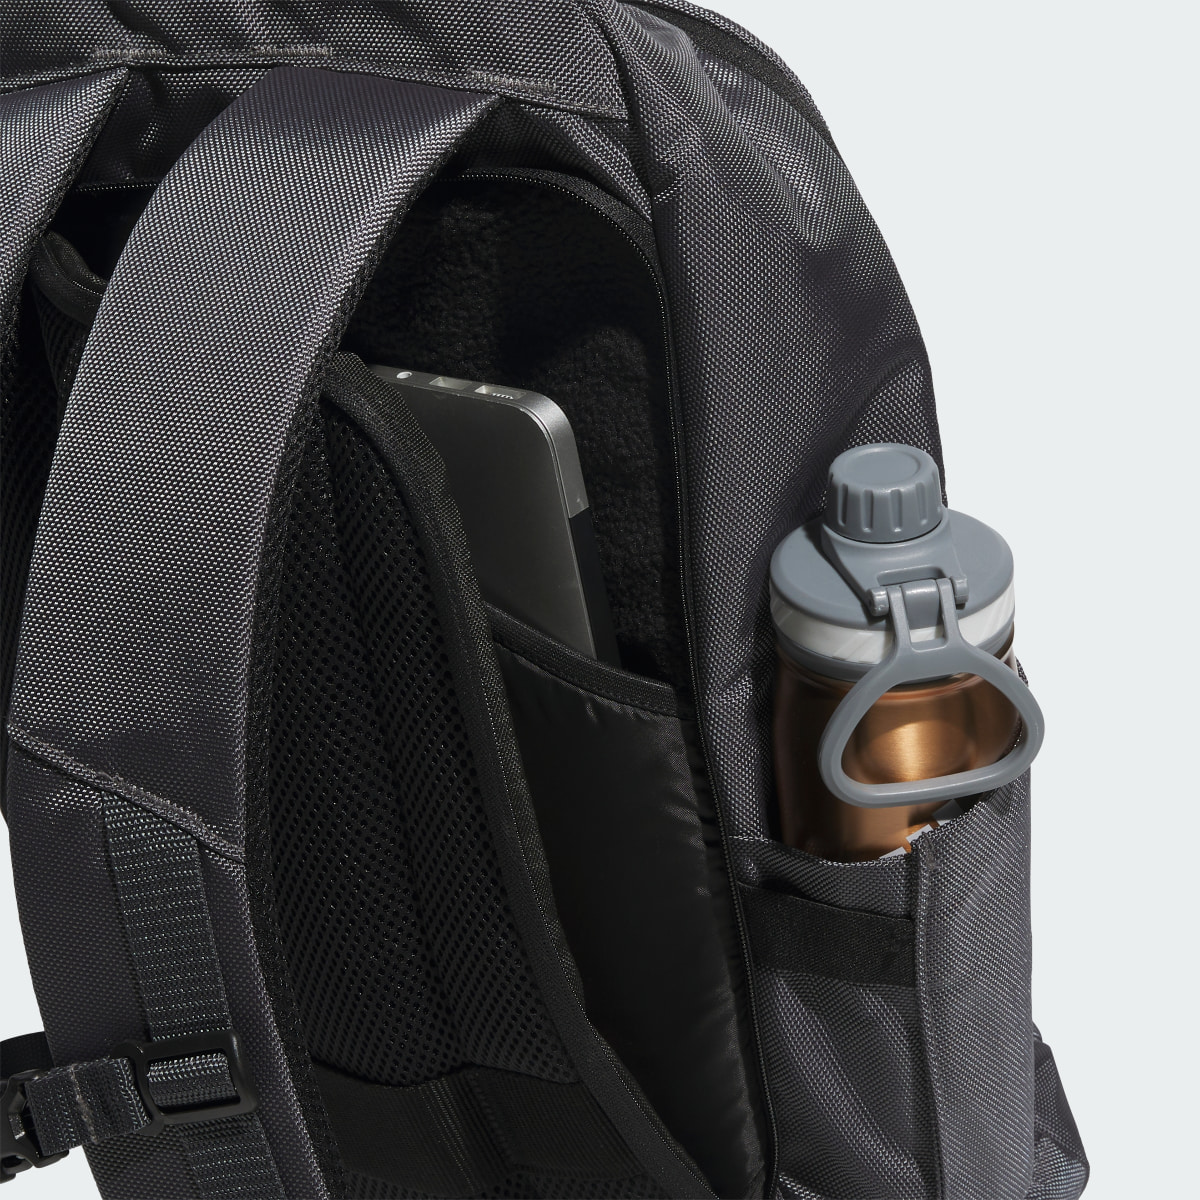 Adidas Hybrid Backpack. 6